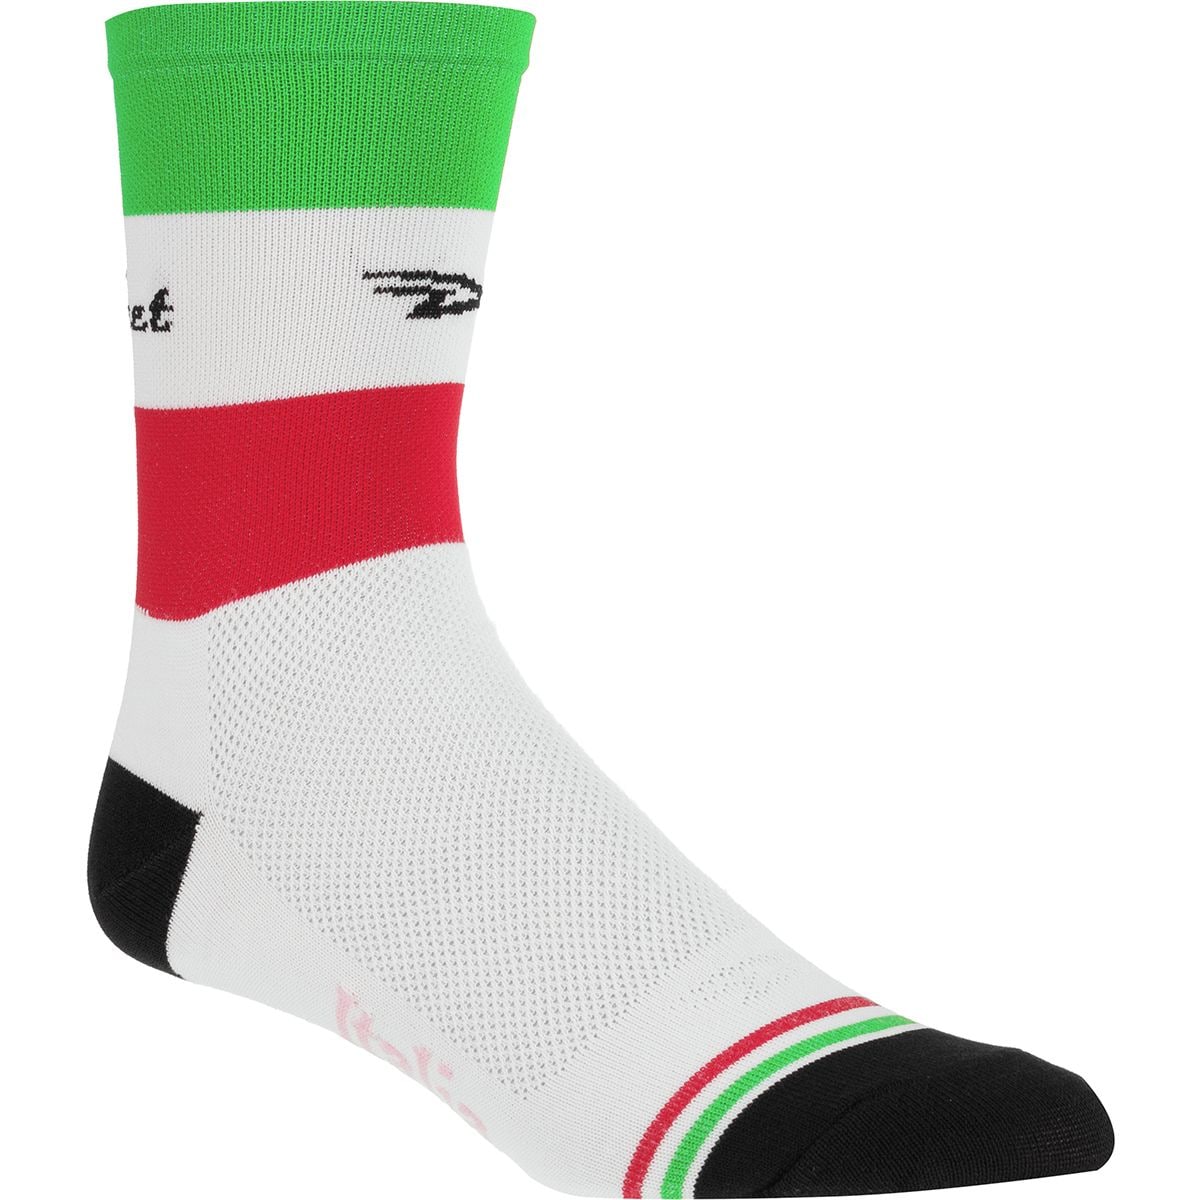 DeFeet Aireator Italia Hi-Top 5in Sock - Men's